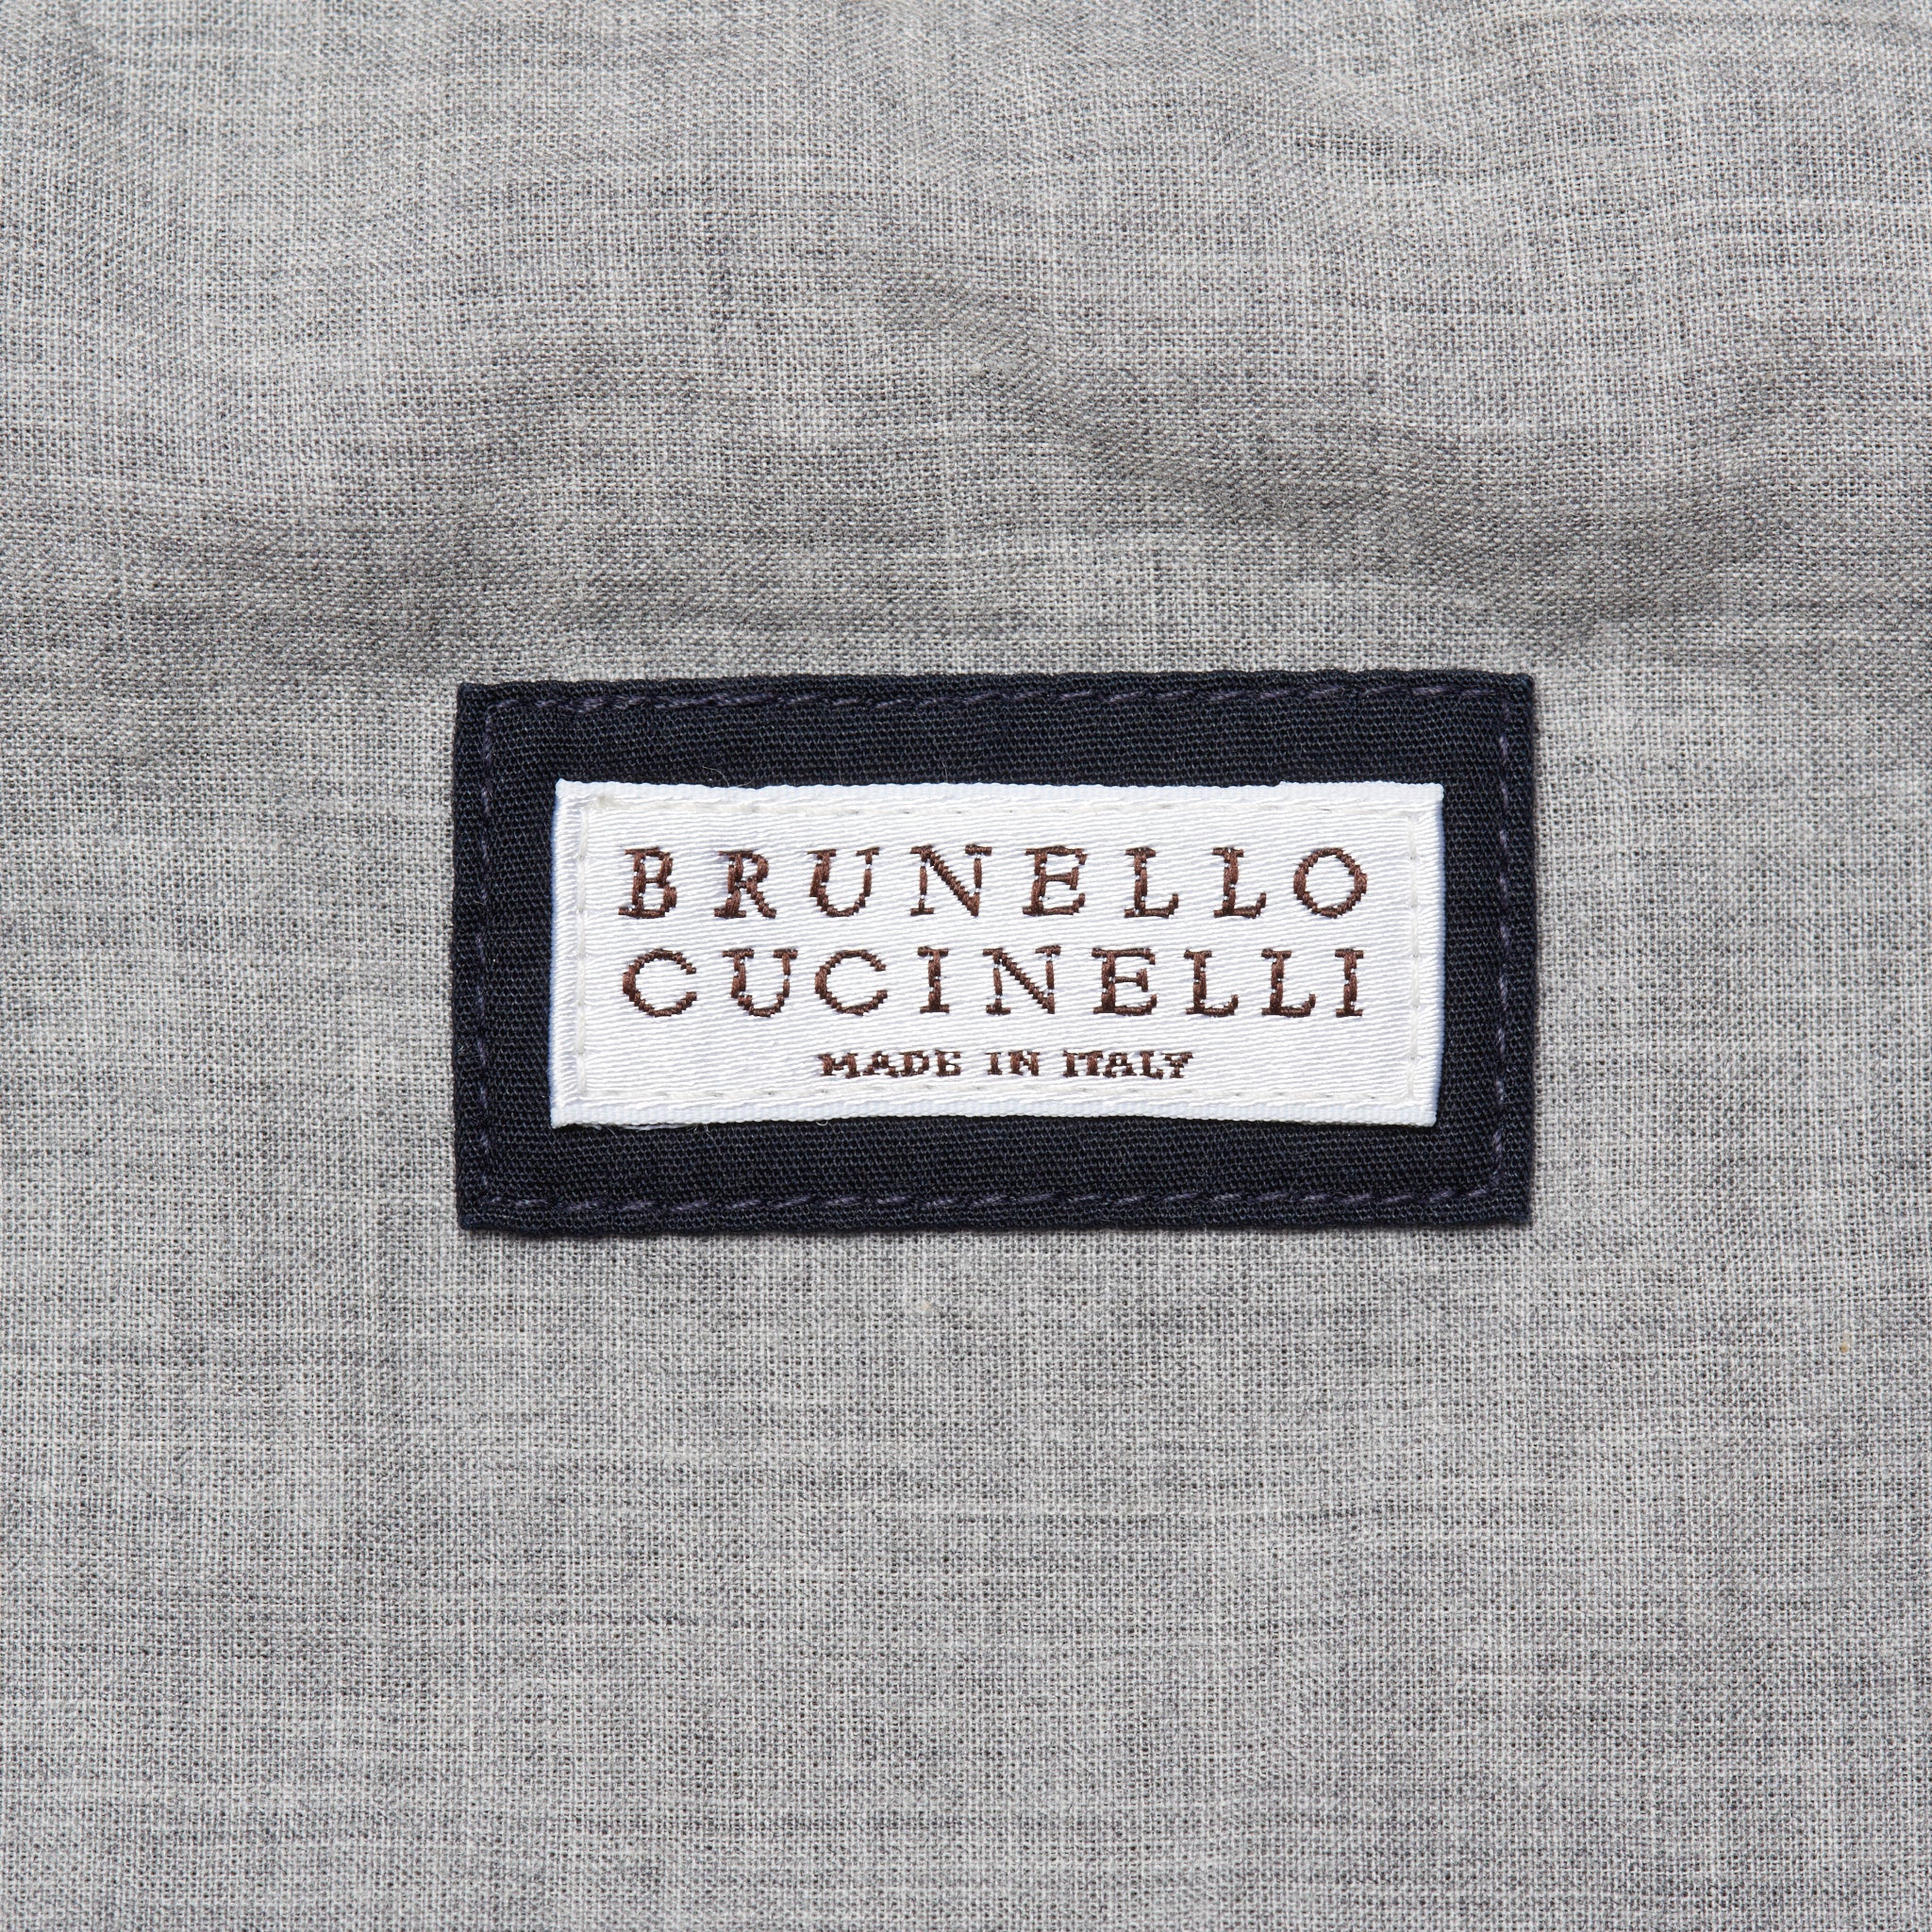 Brunello Cucinelli - Fashion Made in Italy - Partners - Orizzonte